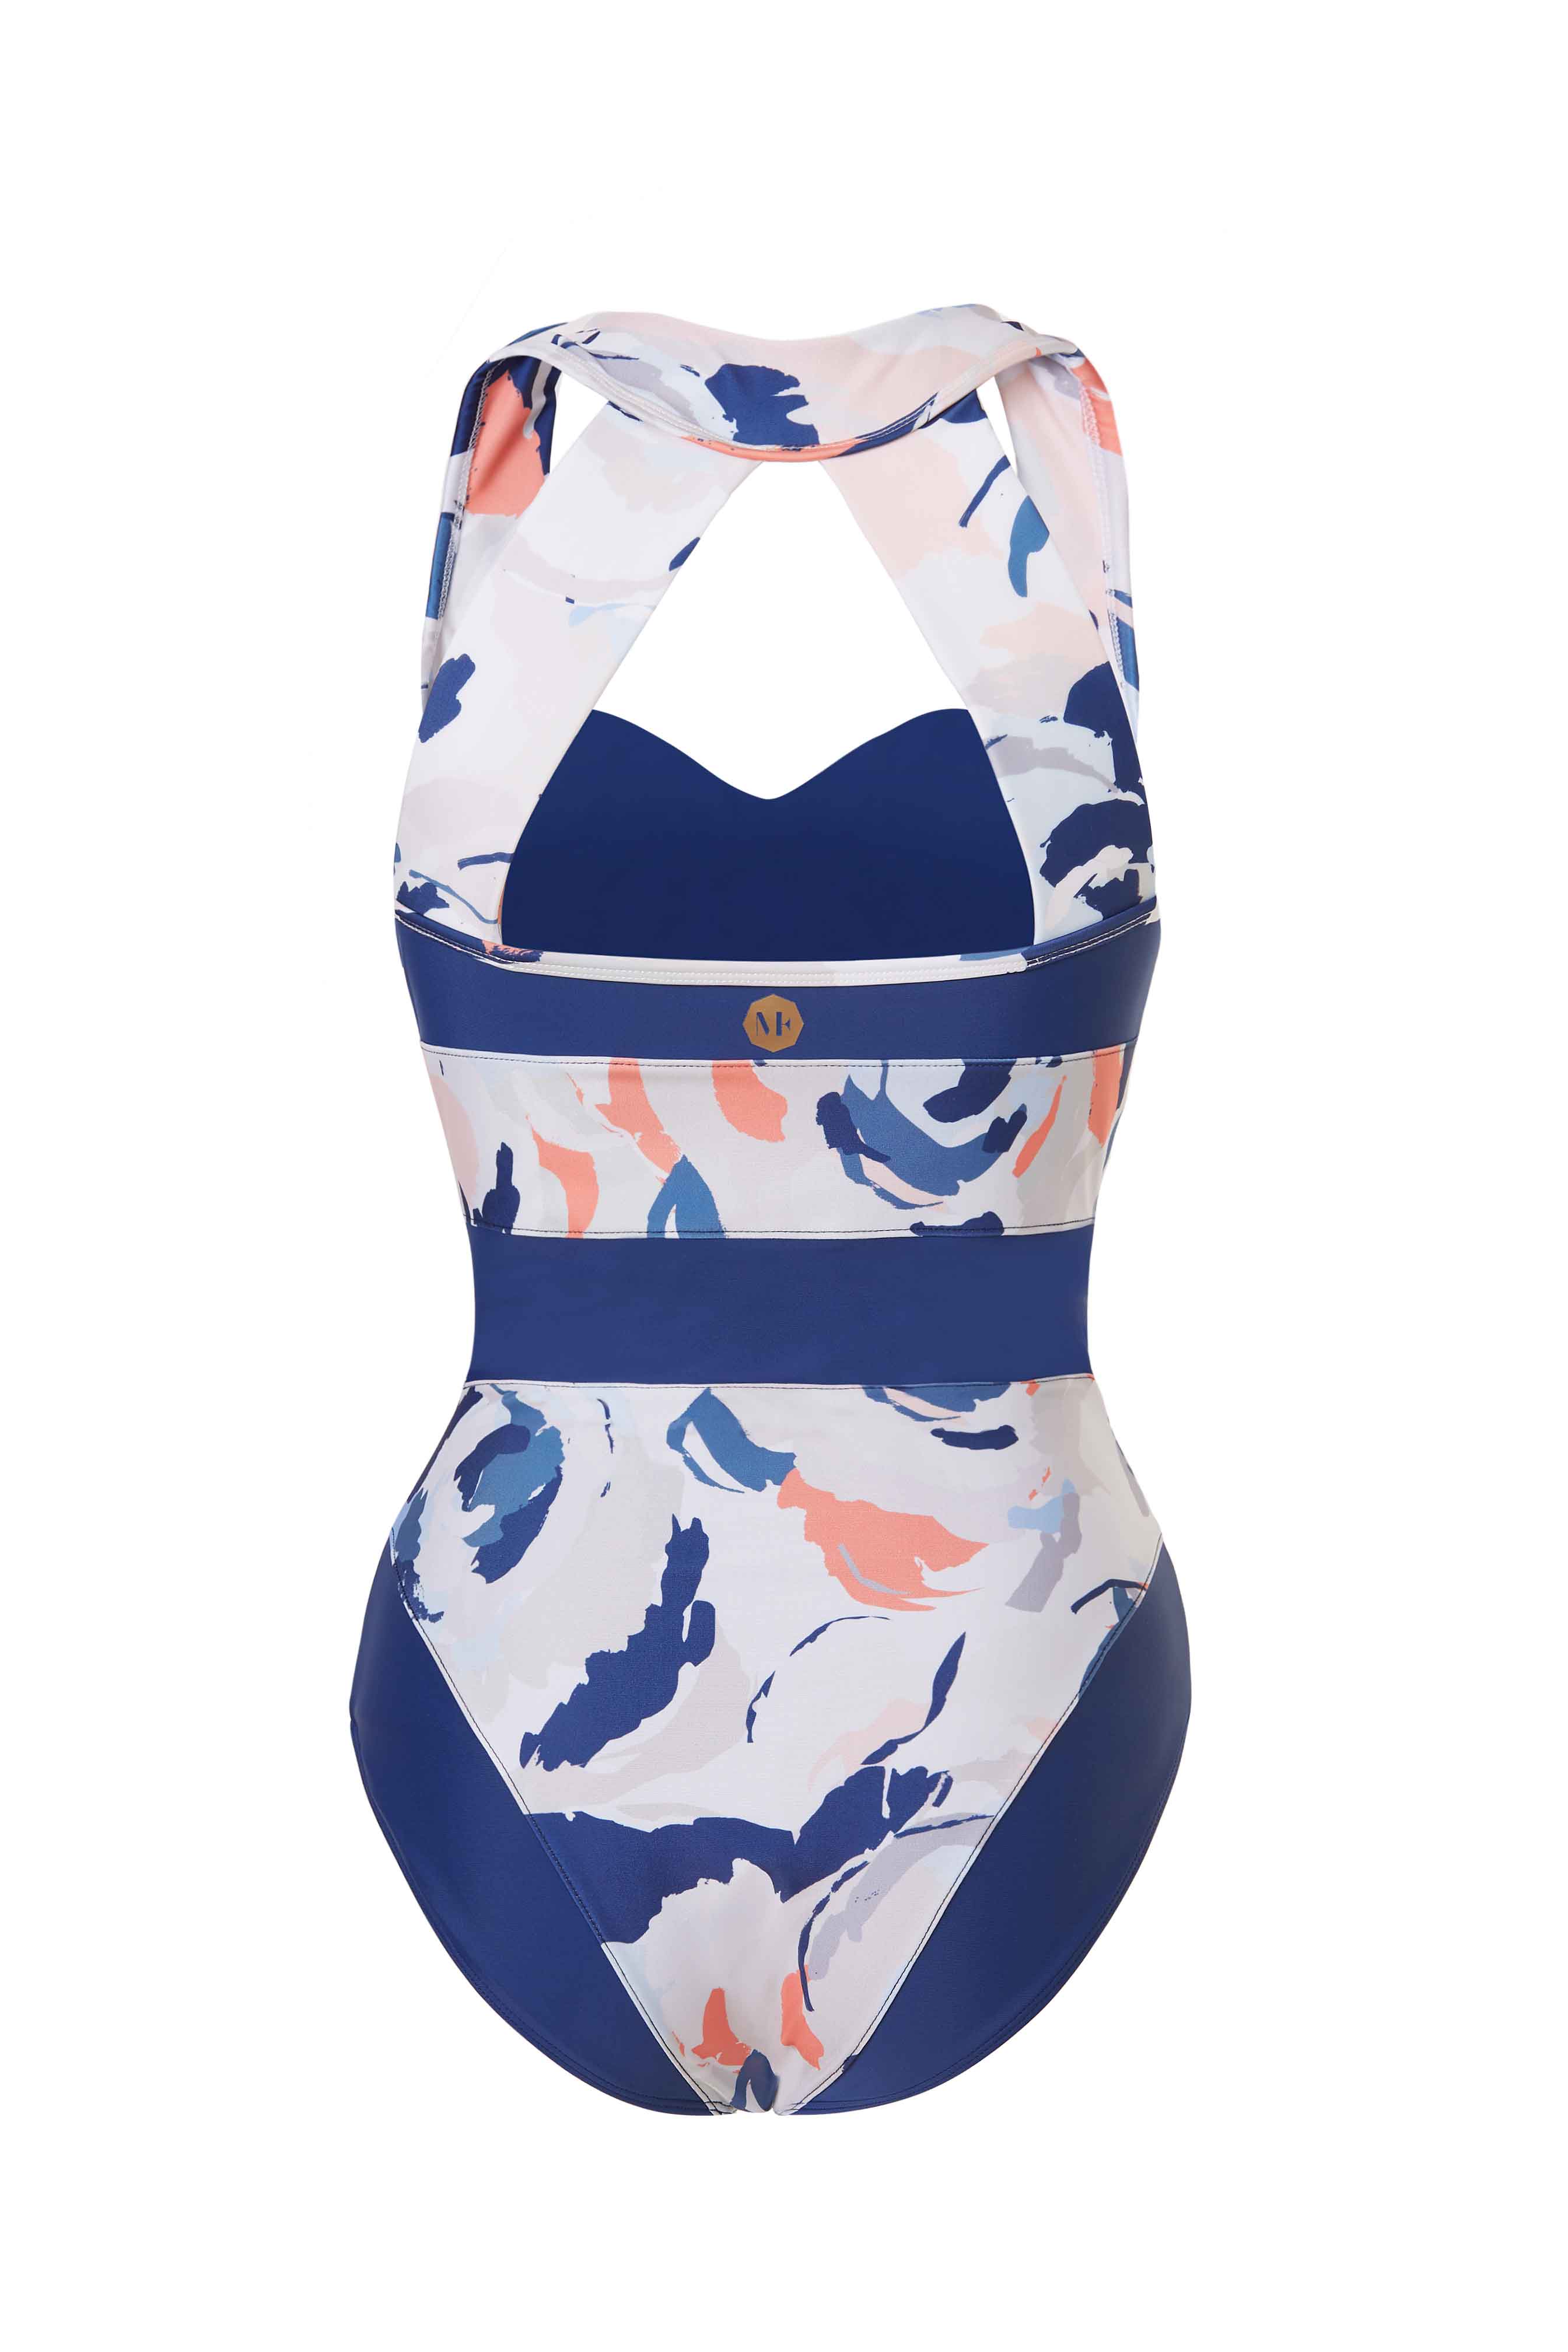 Belvia Shapewear Slimswim Swimwear Supportive Tummy Control Bathing  Swimsuit For Women (20-22, Cherry) XL